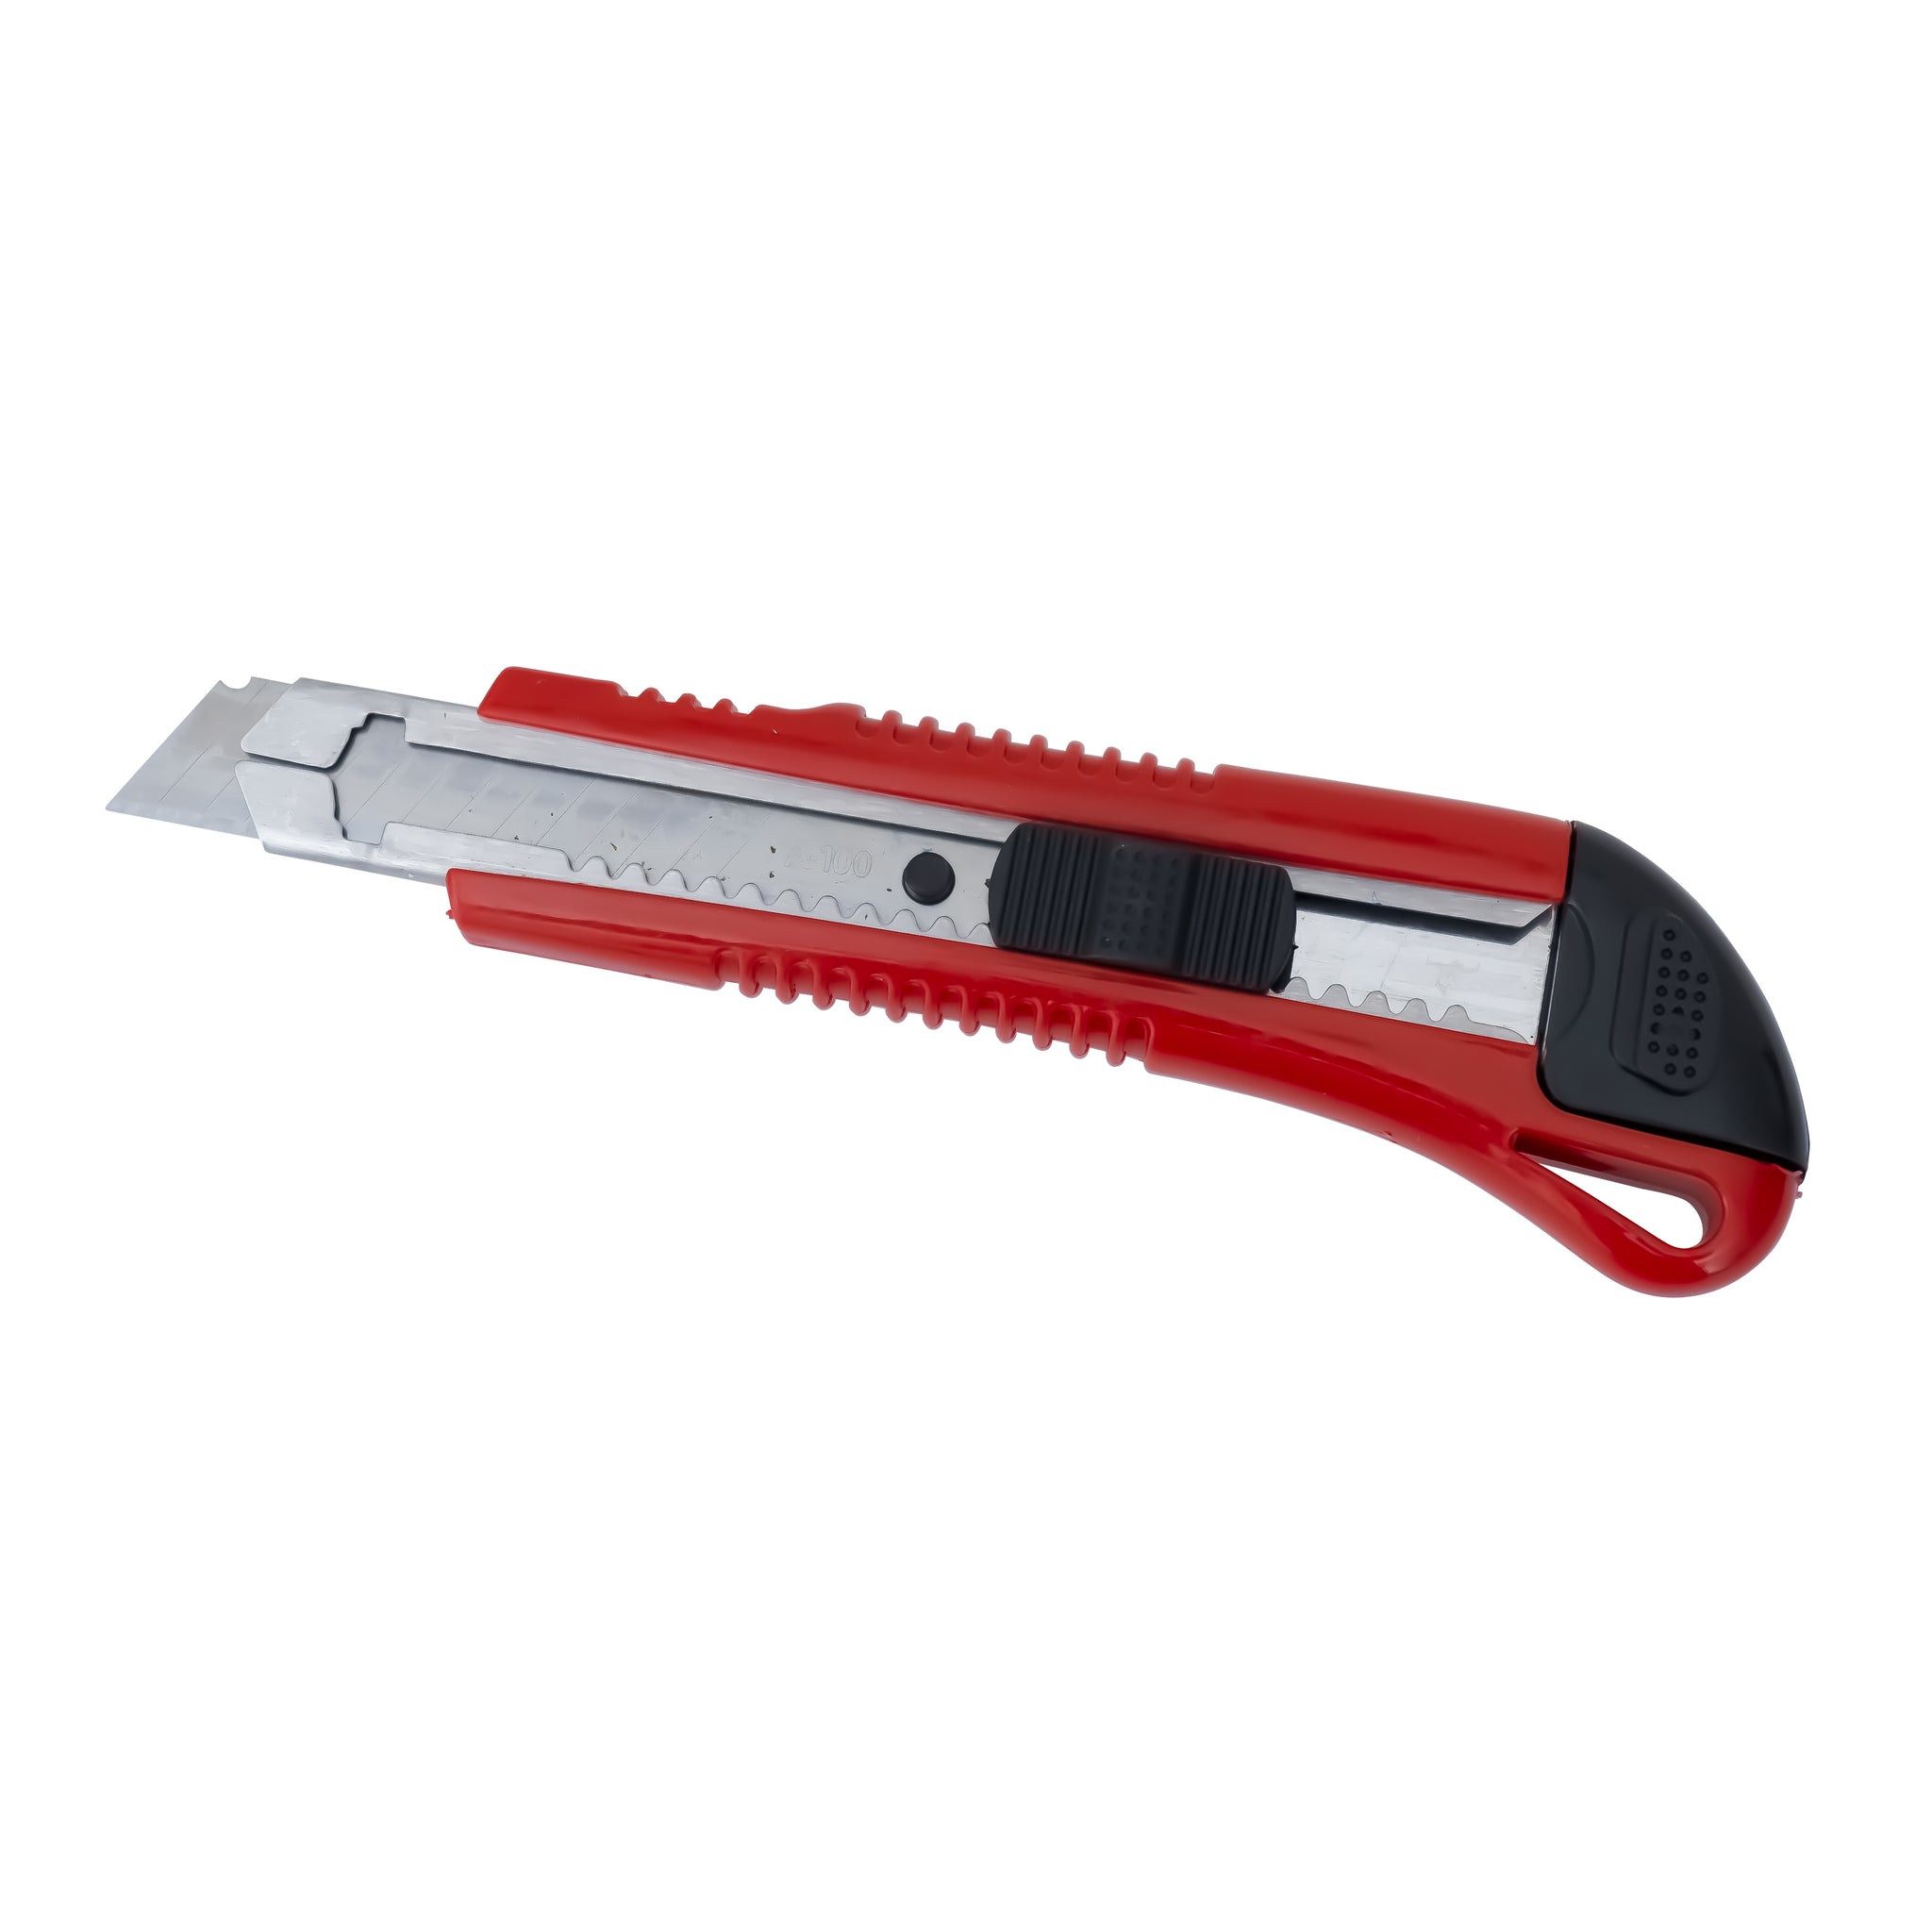 Buy Wholesale China Mini Box Cutter, Small Pocket Knife, Utility